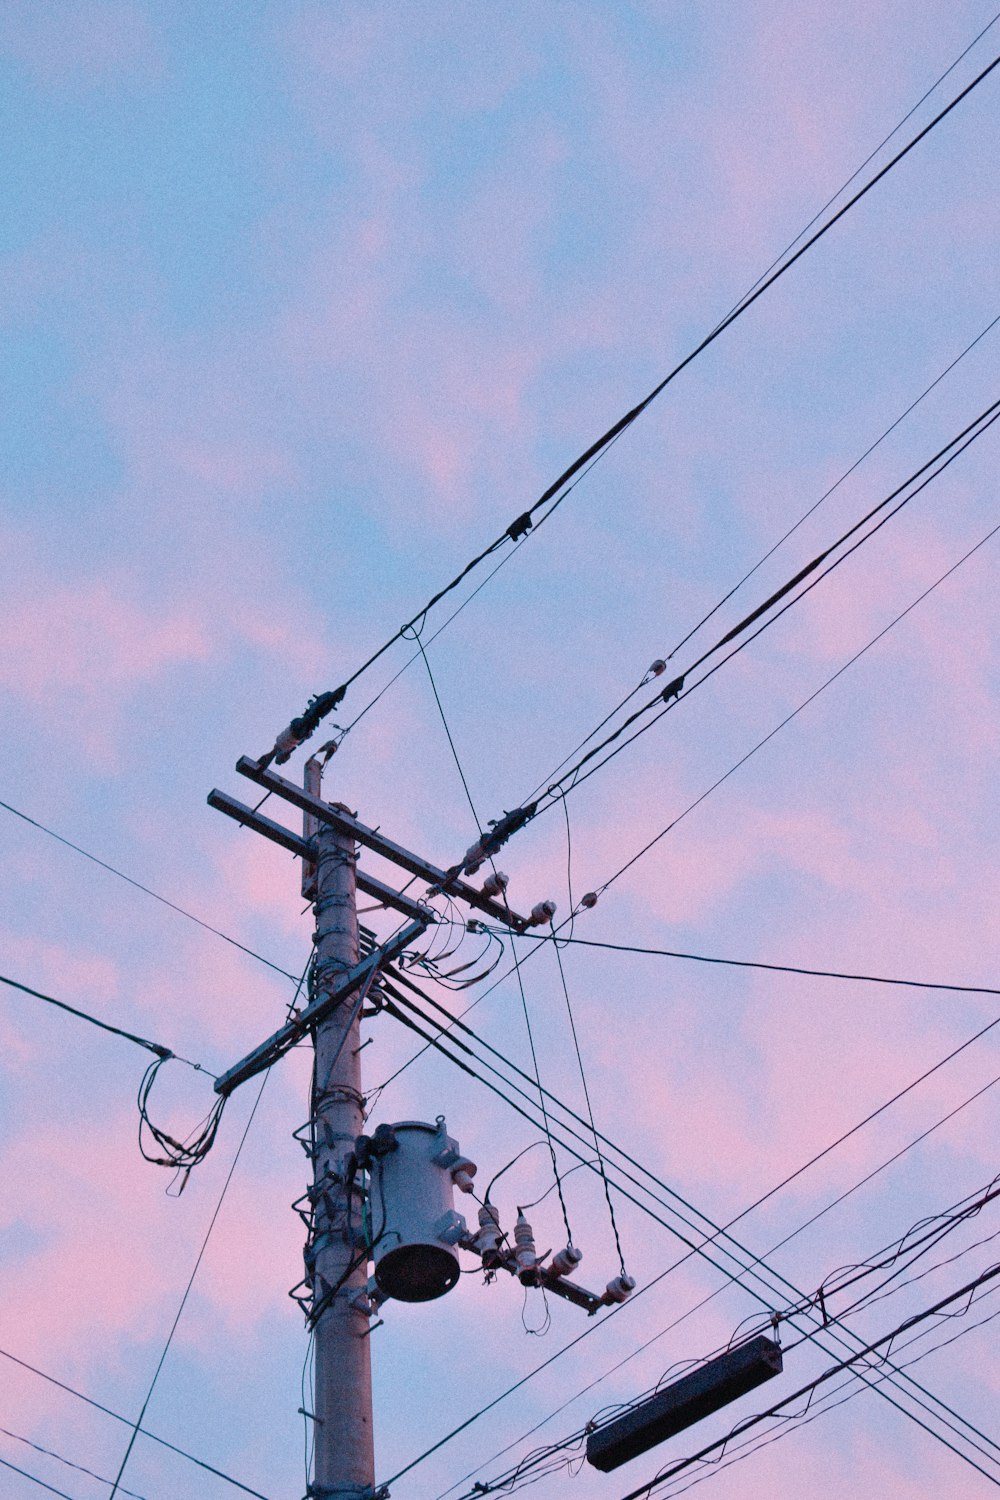 black electric post under blue sky